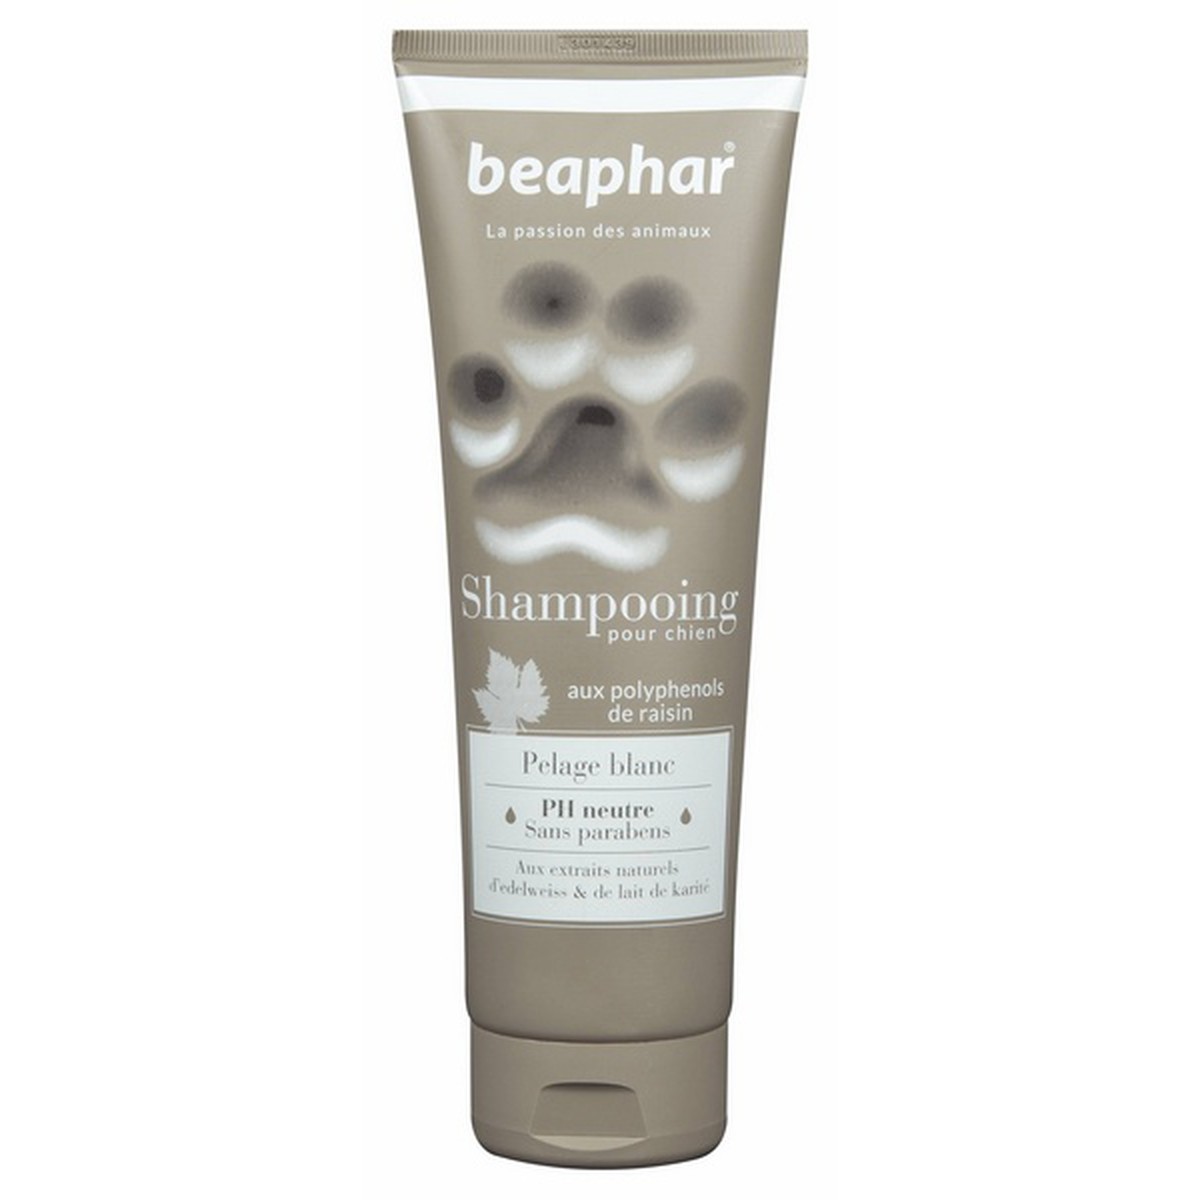   Beaphar Shampooing Pelage blanc 250 ml  250ml